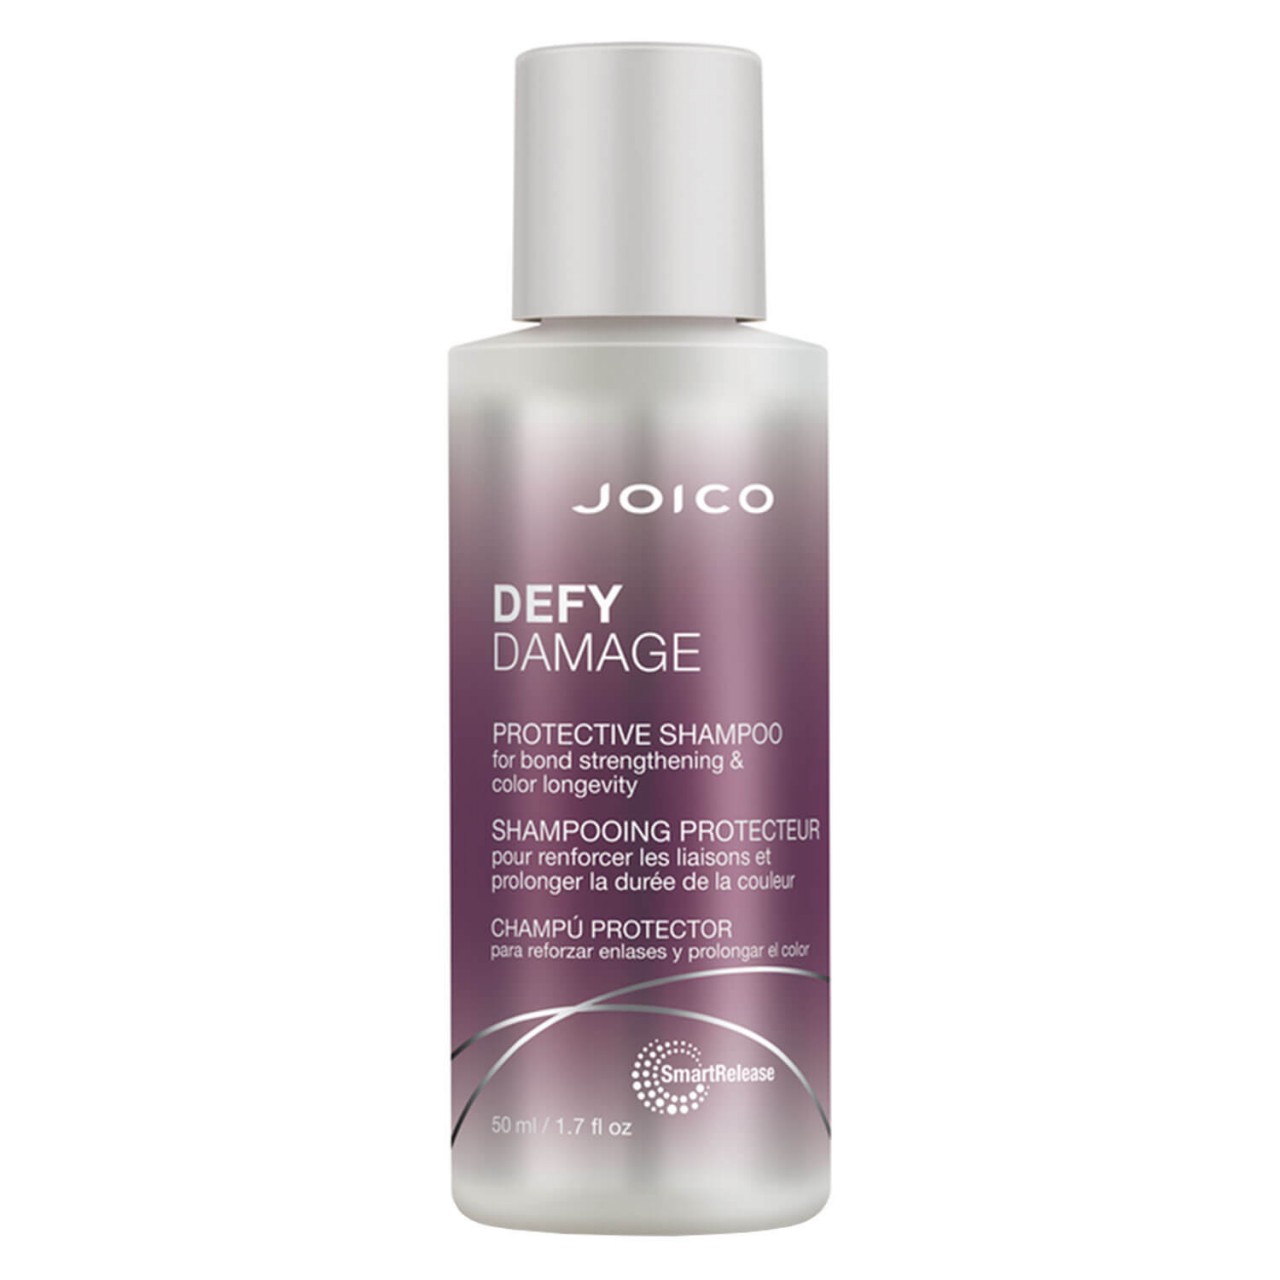 Defy Damage - Protective Shampoo von Joico